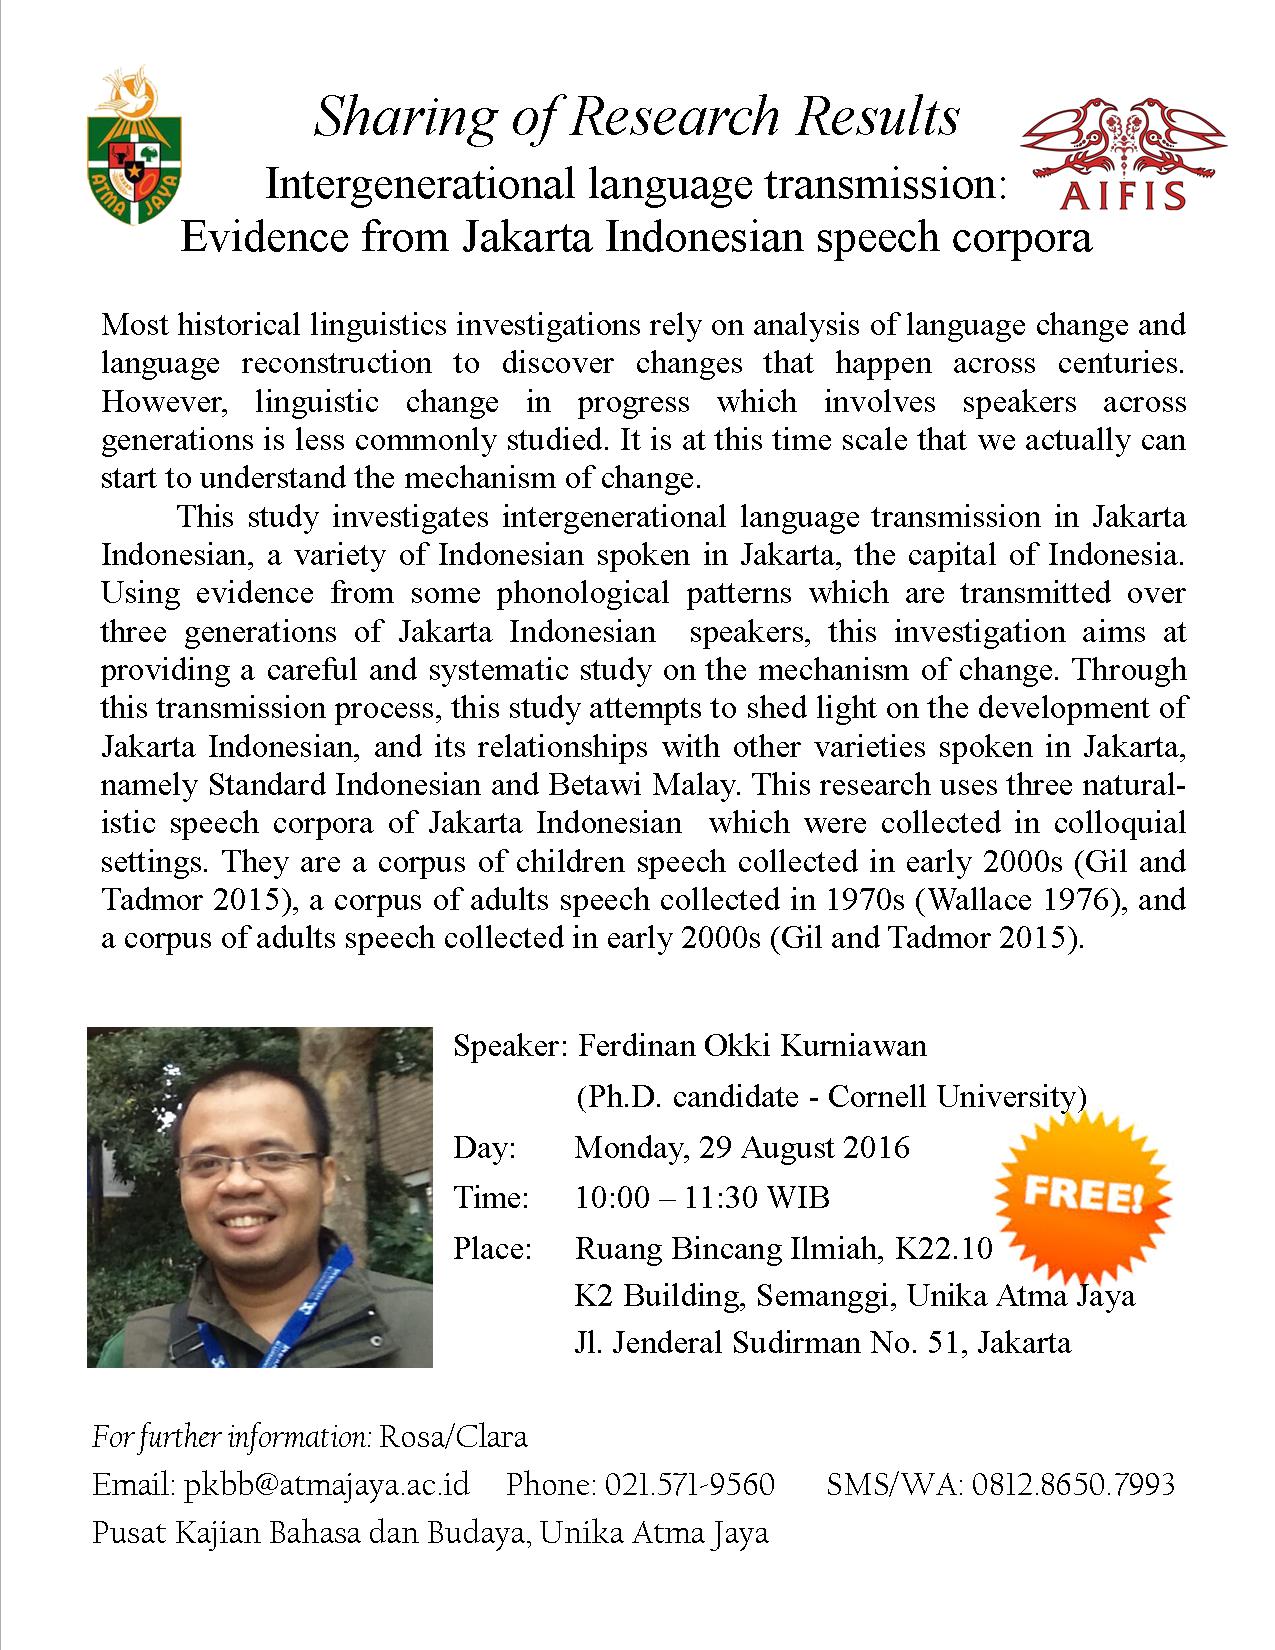 INTERGENERATIONAL LANGUAGE TRANSMISSION: EVIDENCE FROM JAKARTA INDONESIAN SPEECH CORPORA